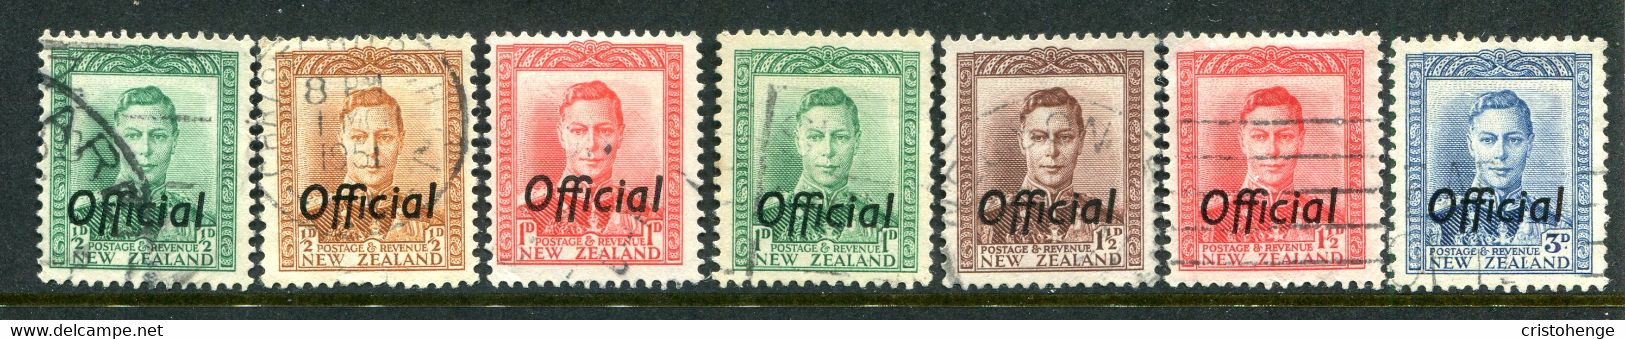 New Zealand 1938-51 Officials - KGVI - Set Used (SG O134-O140) - Service